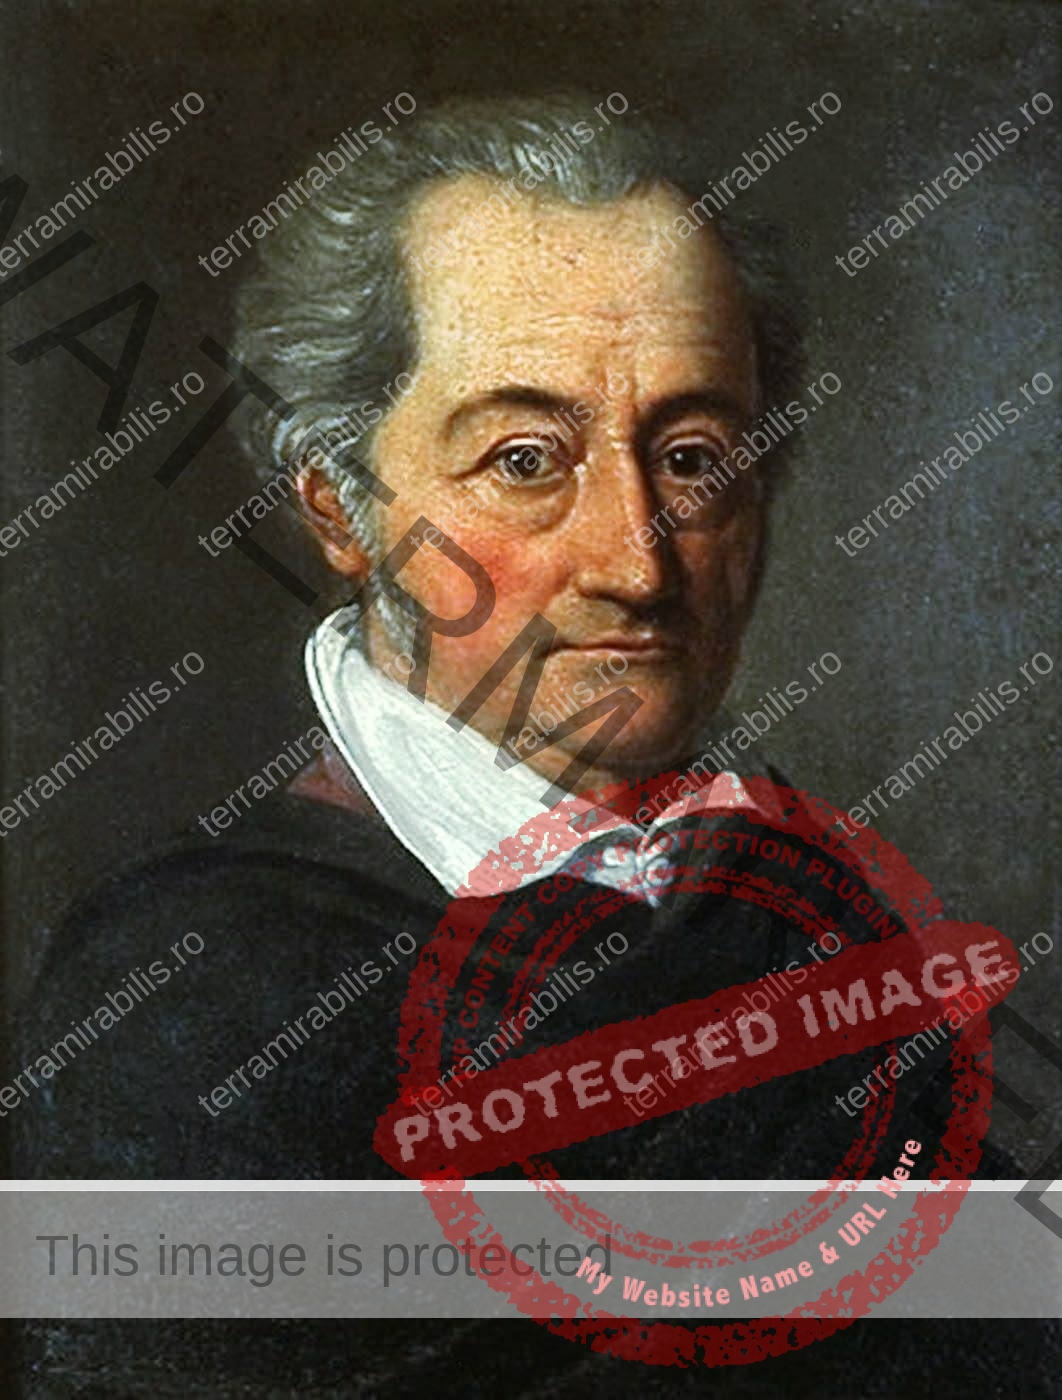 Johann Wolfgang von Goethe